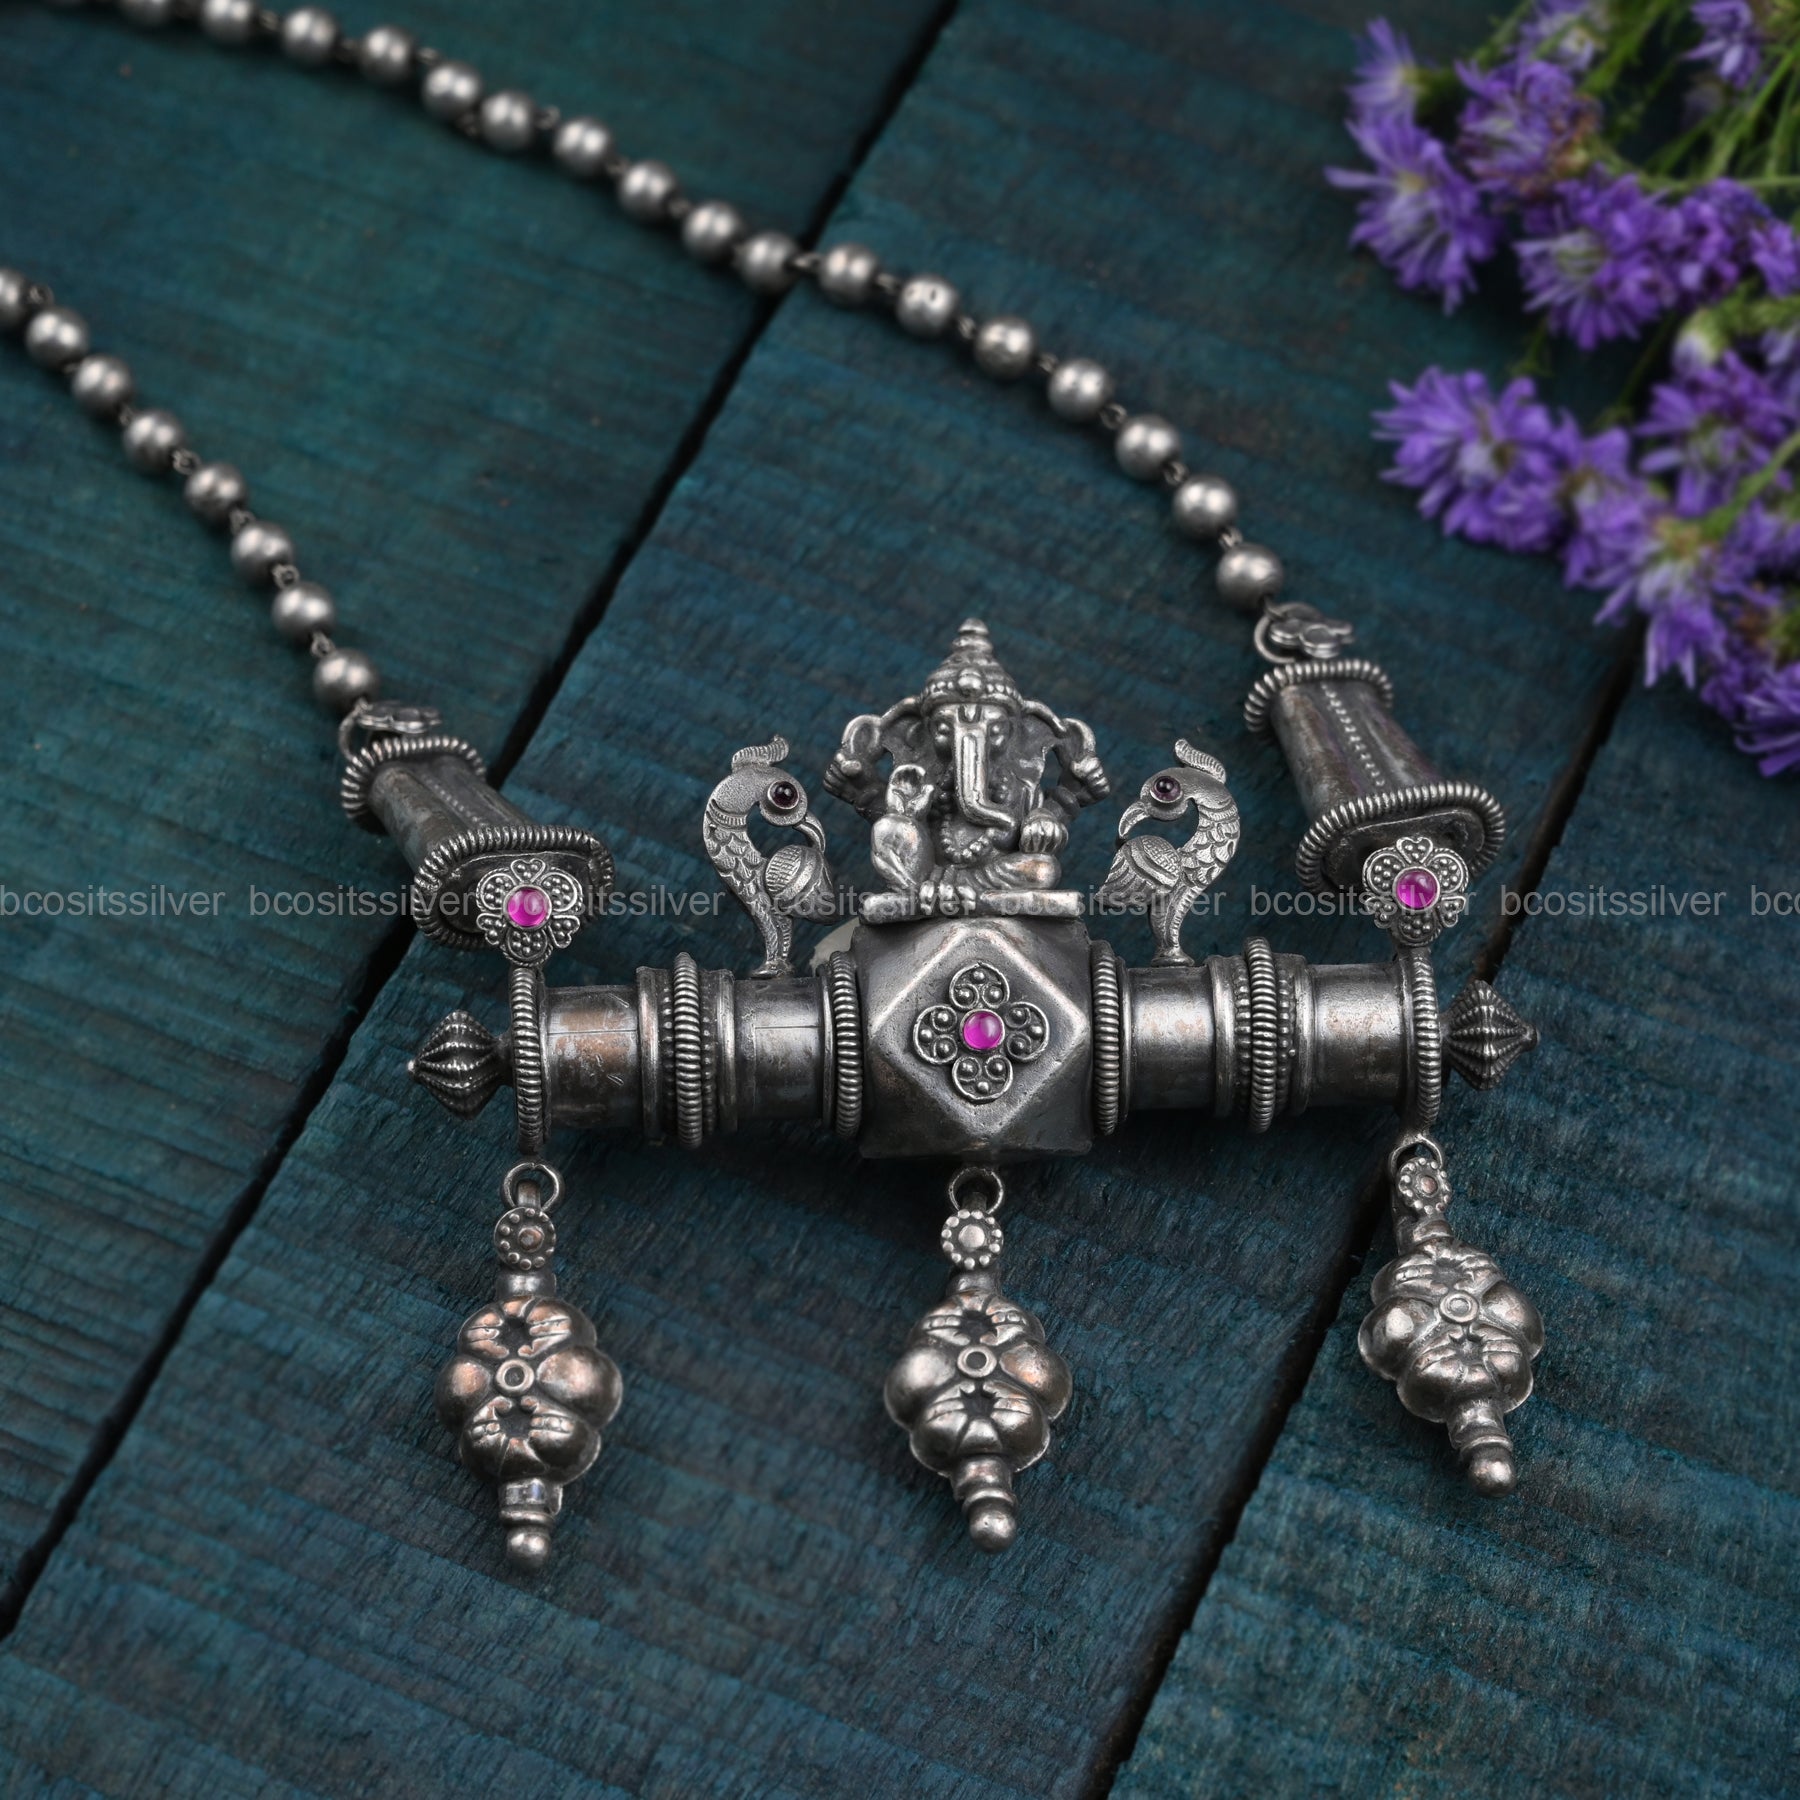 Oxidized Silver Lord Ganesha Designed Necklace - 4431